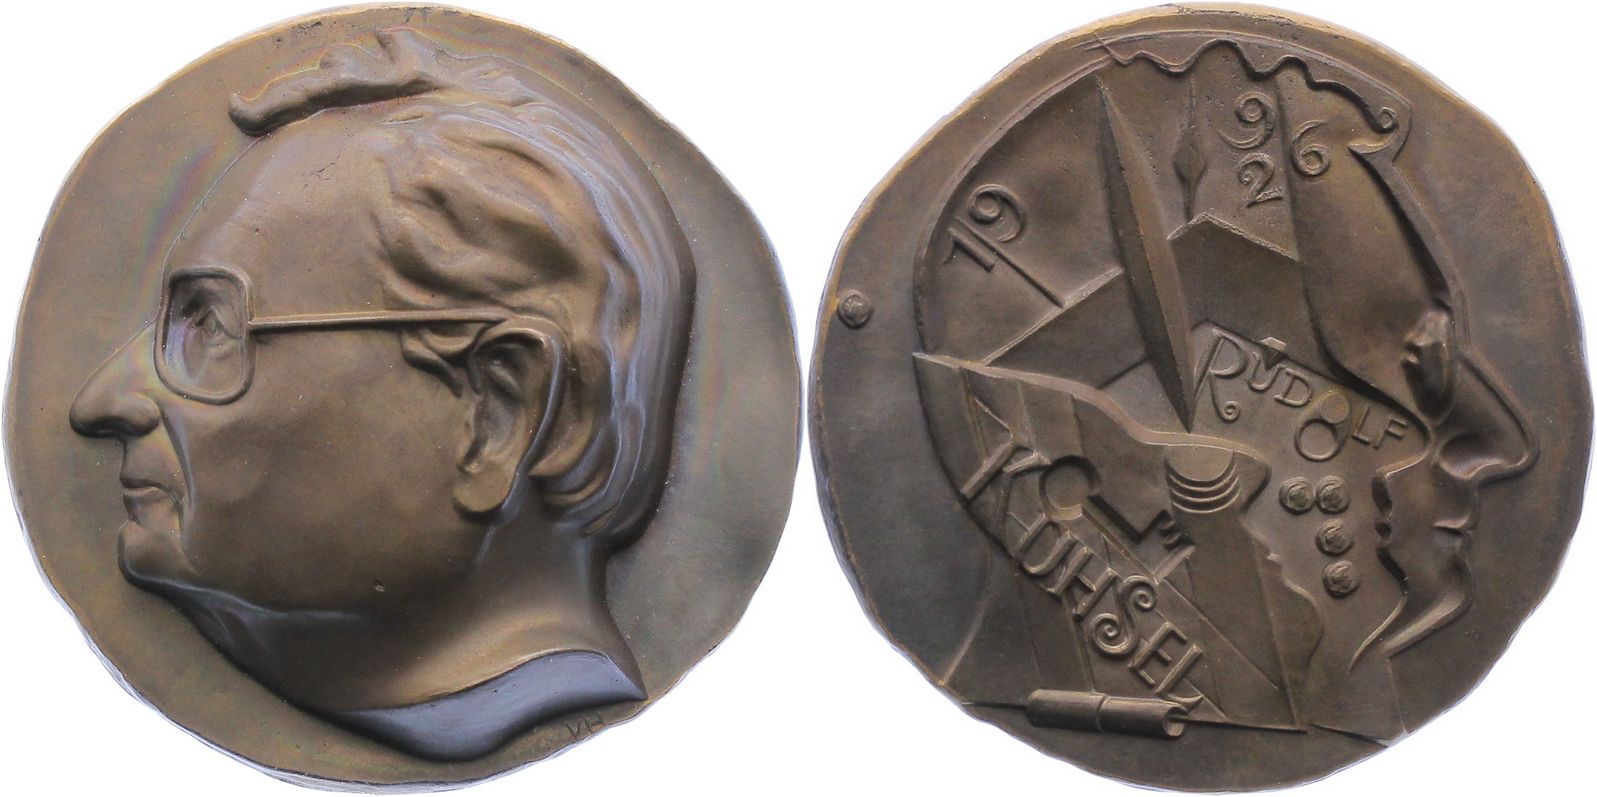 Foto Numismatik Bronzemedaille 1996